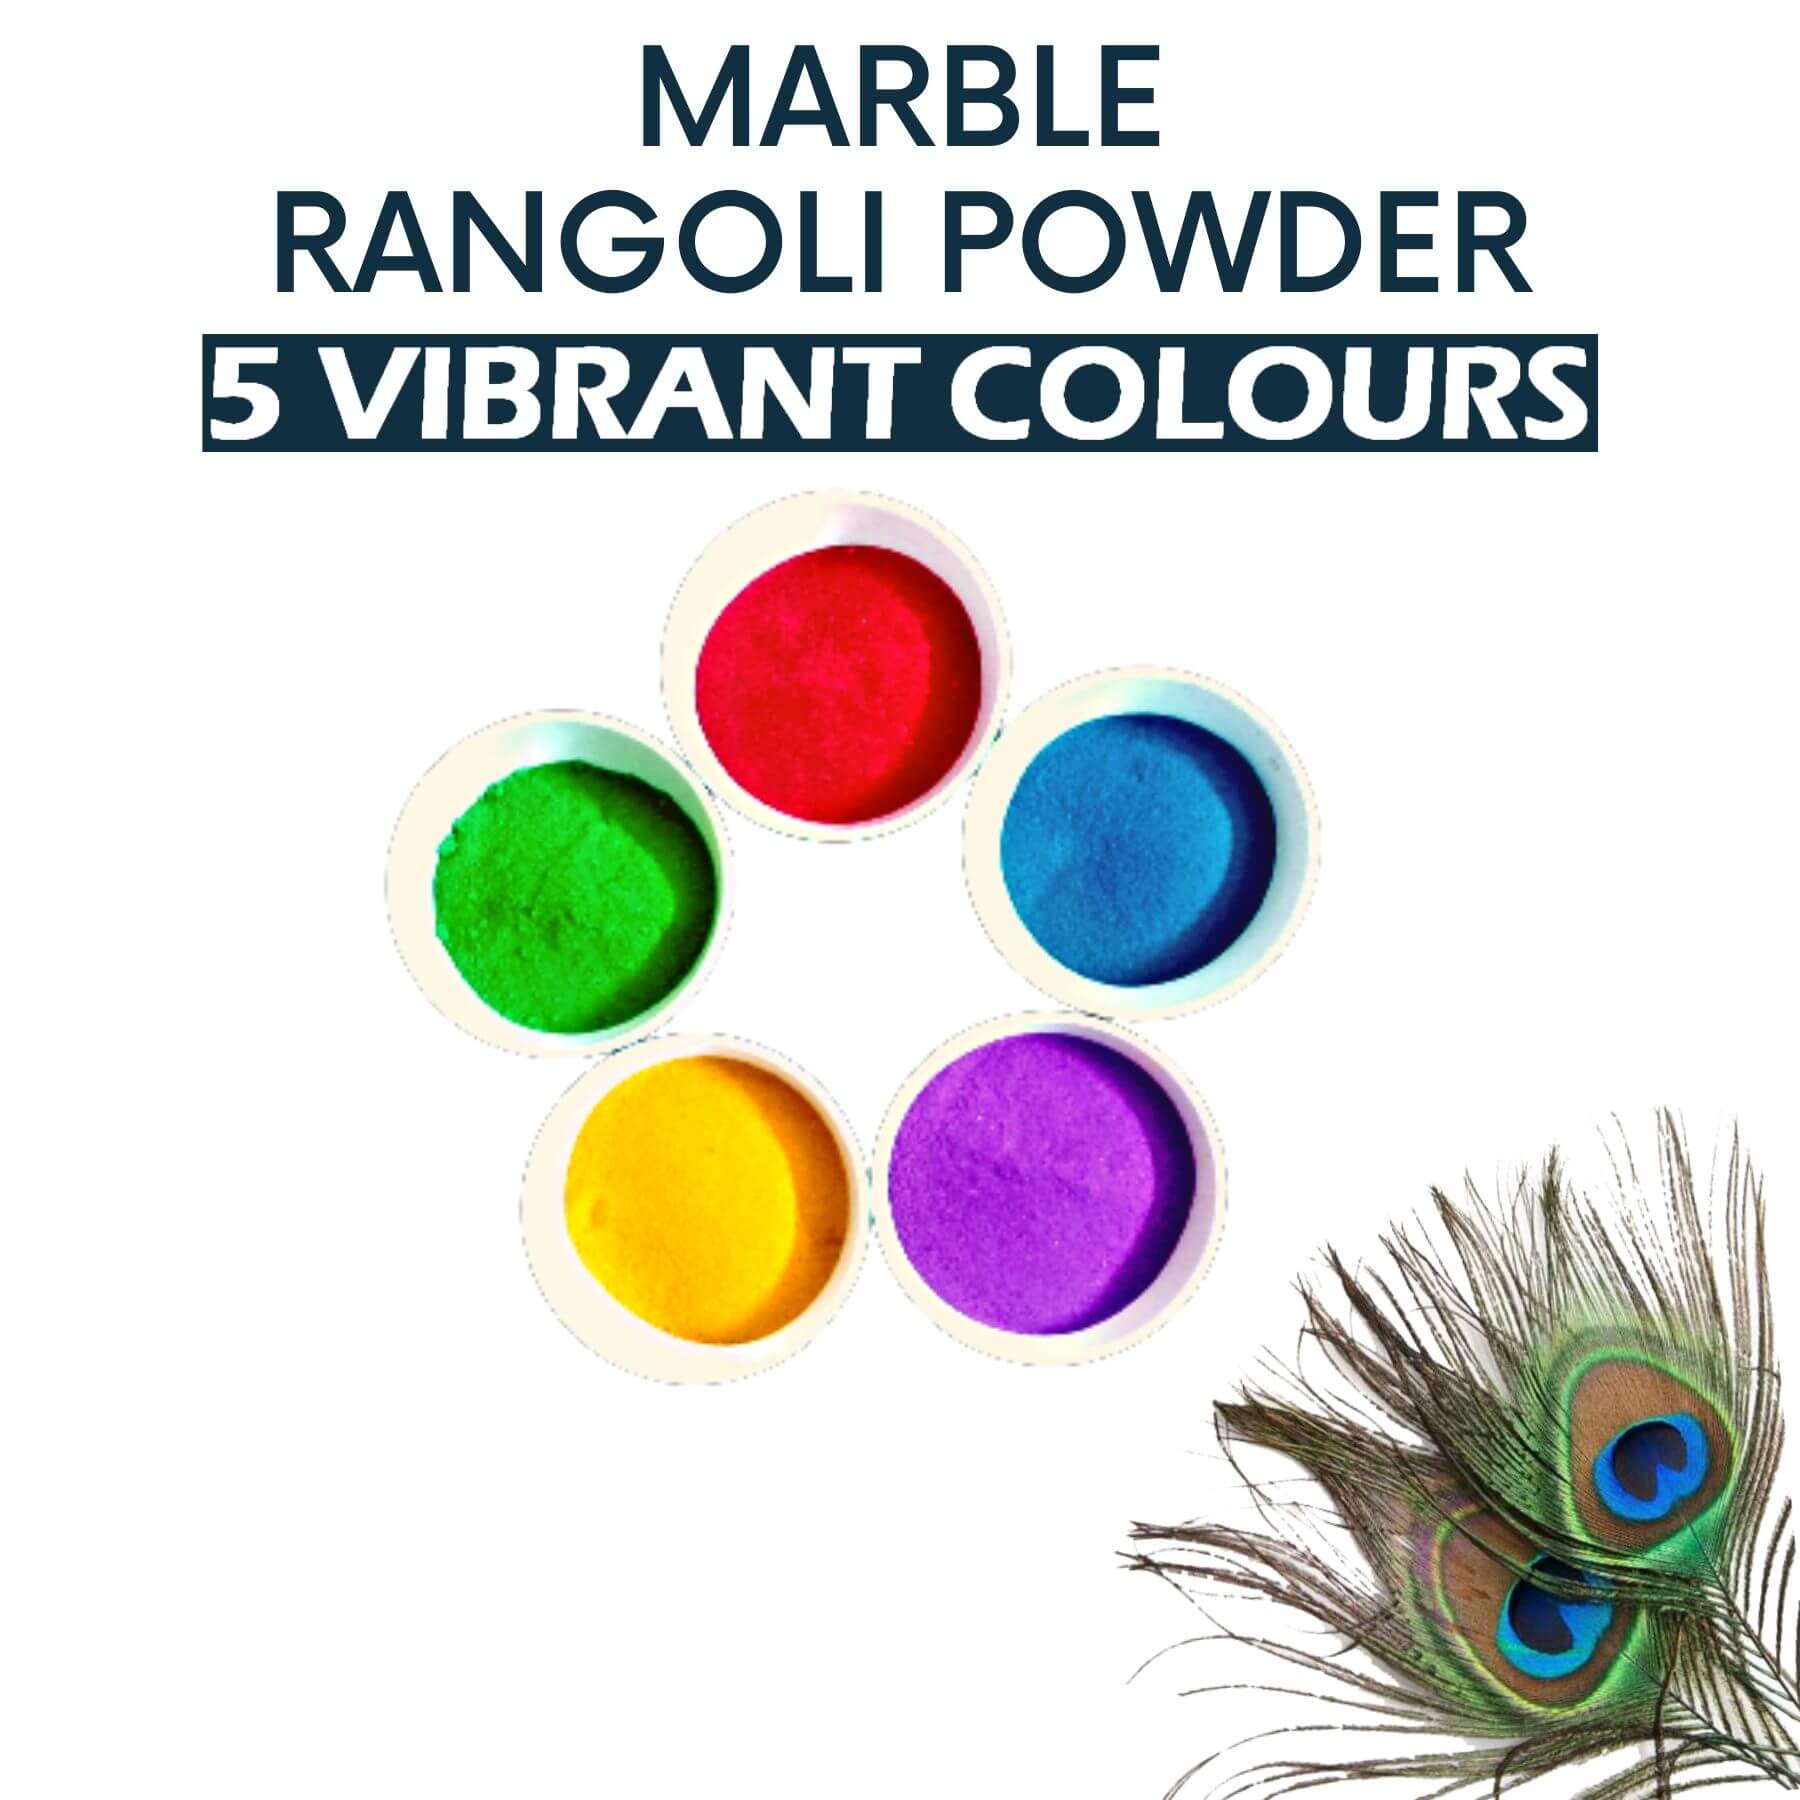 Marble Rangoli Powder - 10 Vibrant Colours(Each 200g) - 2Kg Pack + Shipping  Free - Aalayam Selveer